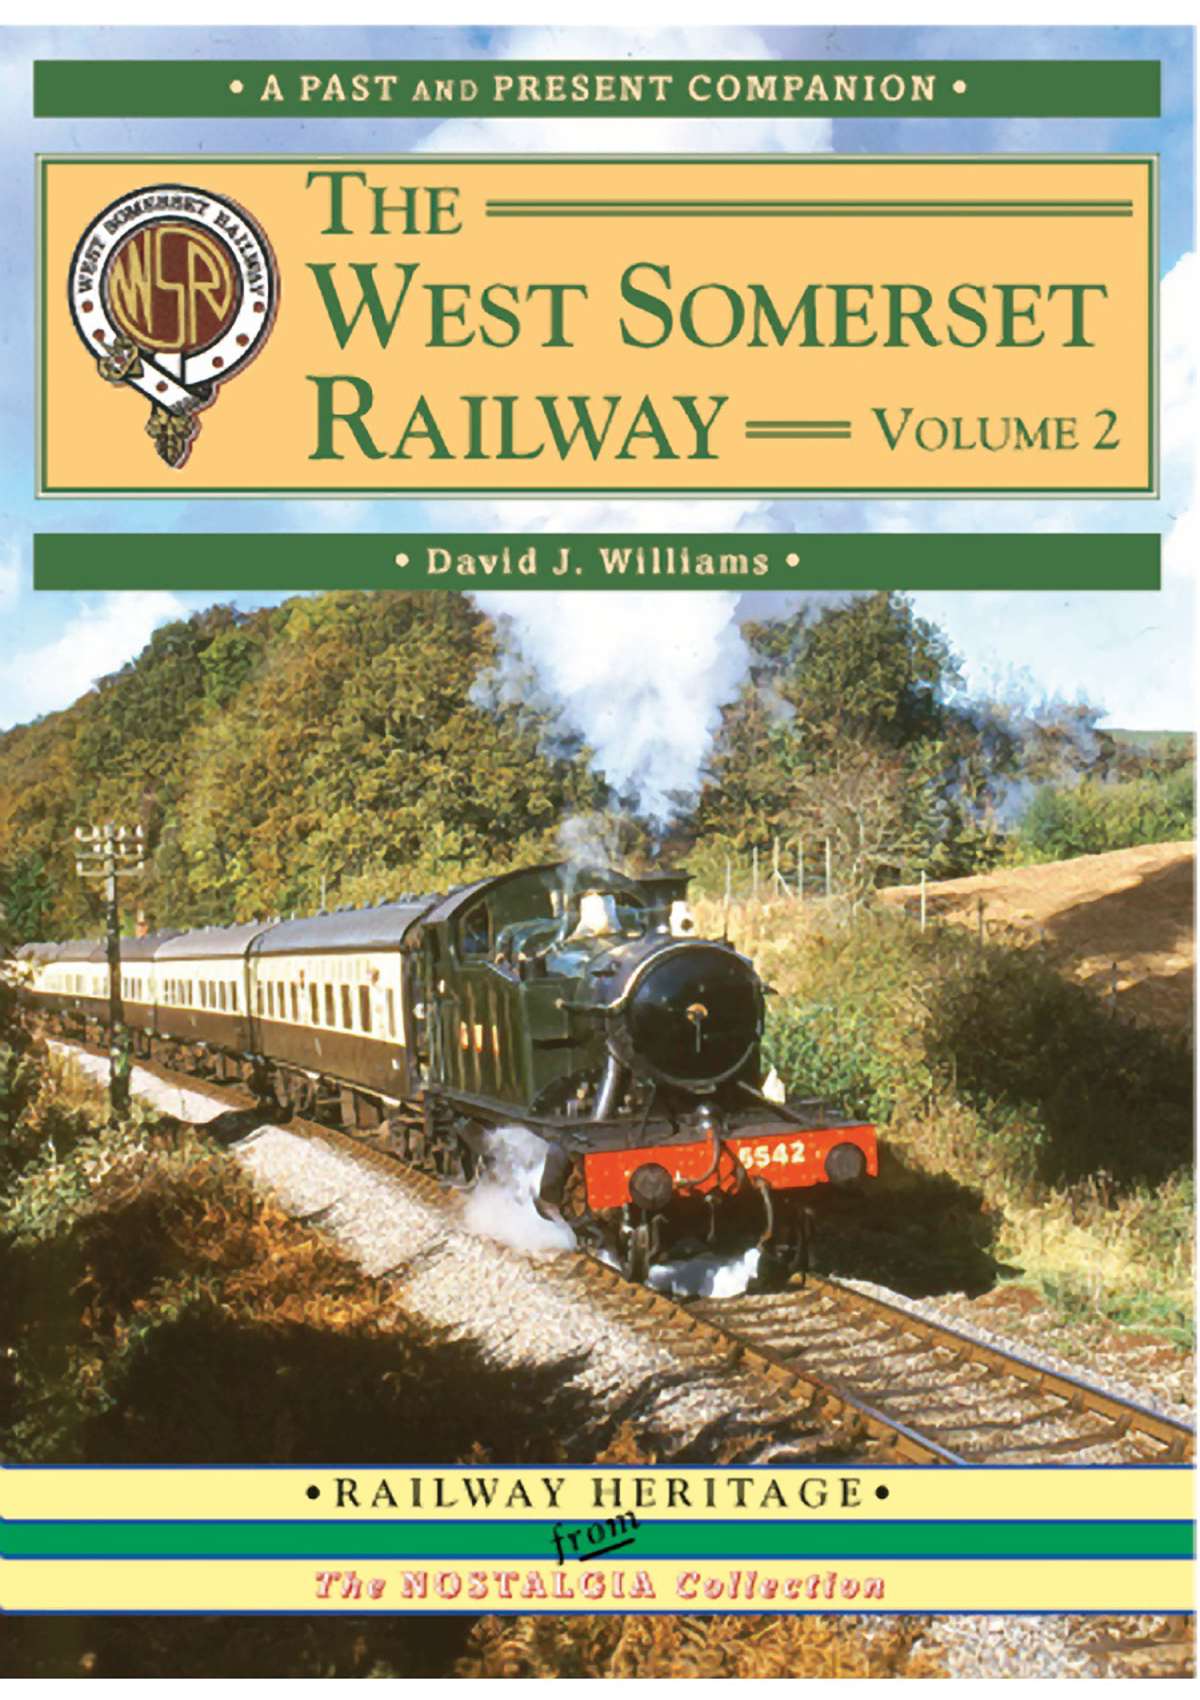 2581 - The West Somerset Railway Volume 2